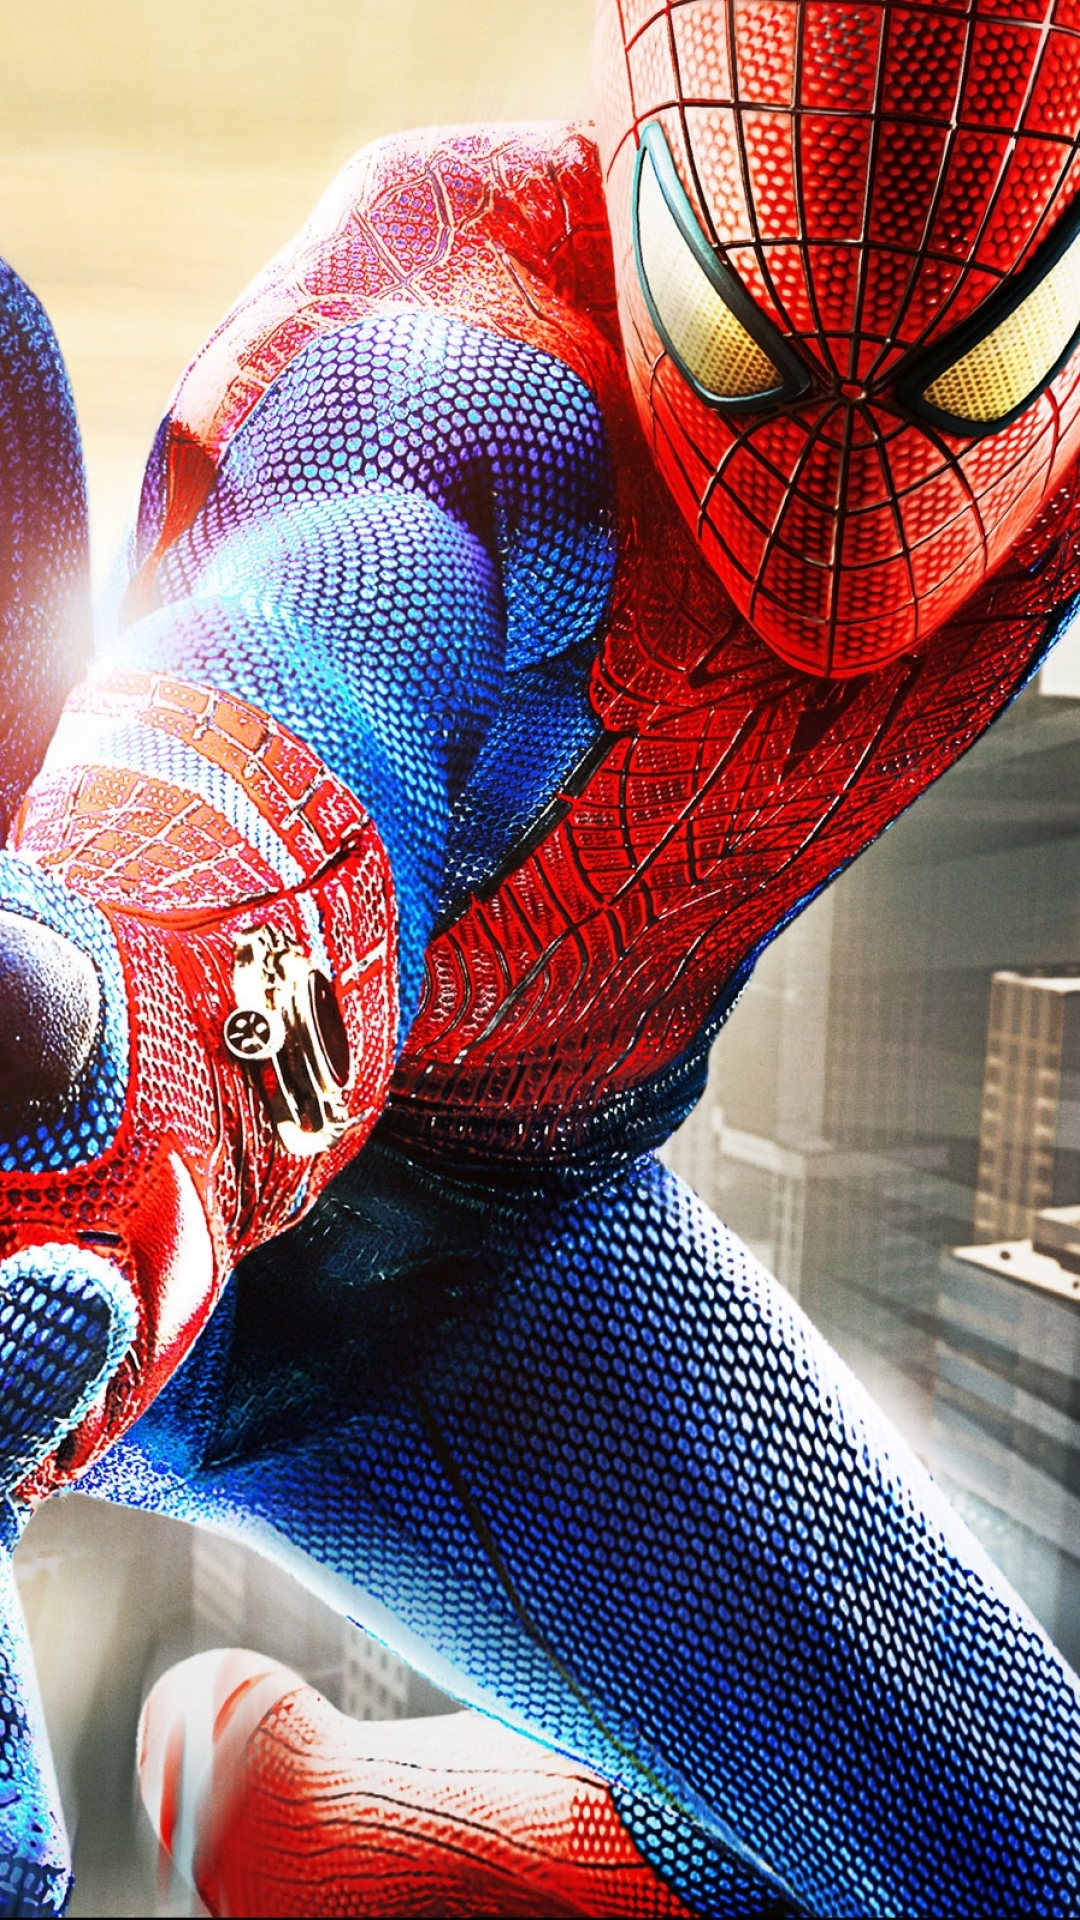 Descarga gratuita de fondo de pantalla para móvil de Videojuego, Spider Man, The Amazing Spider Man.